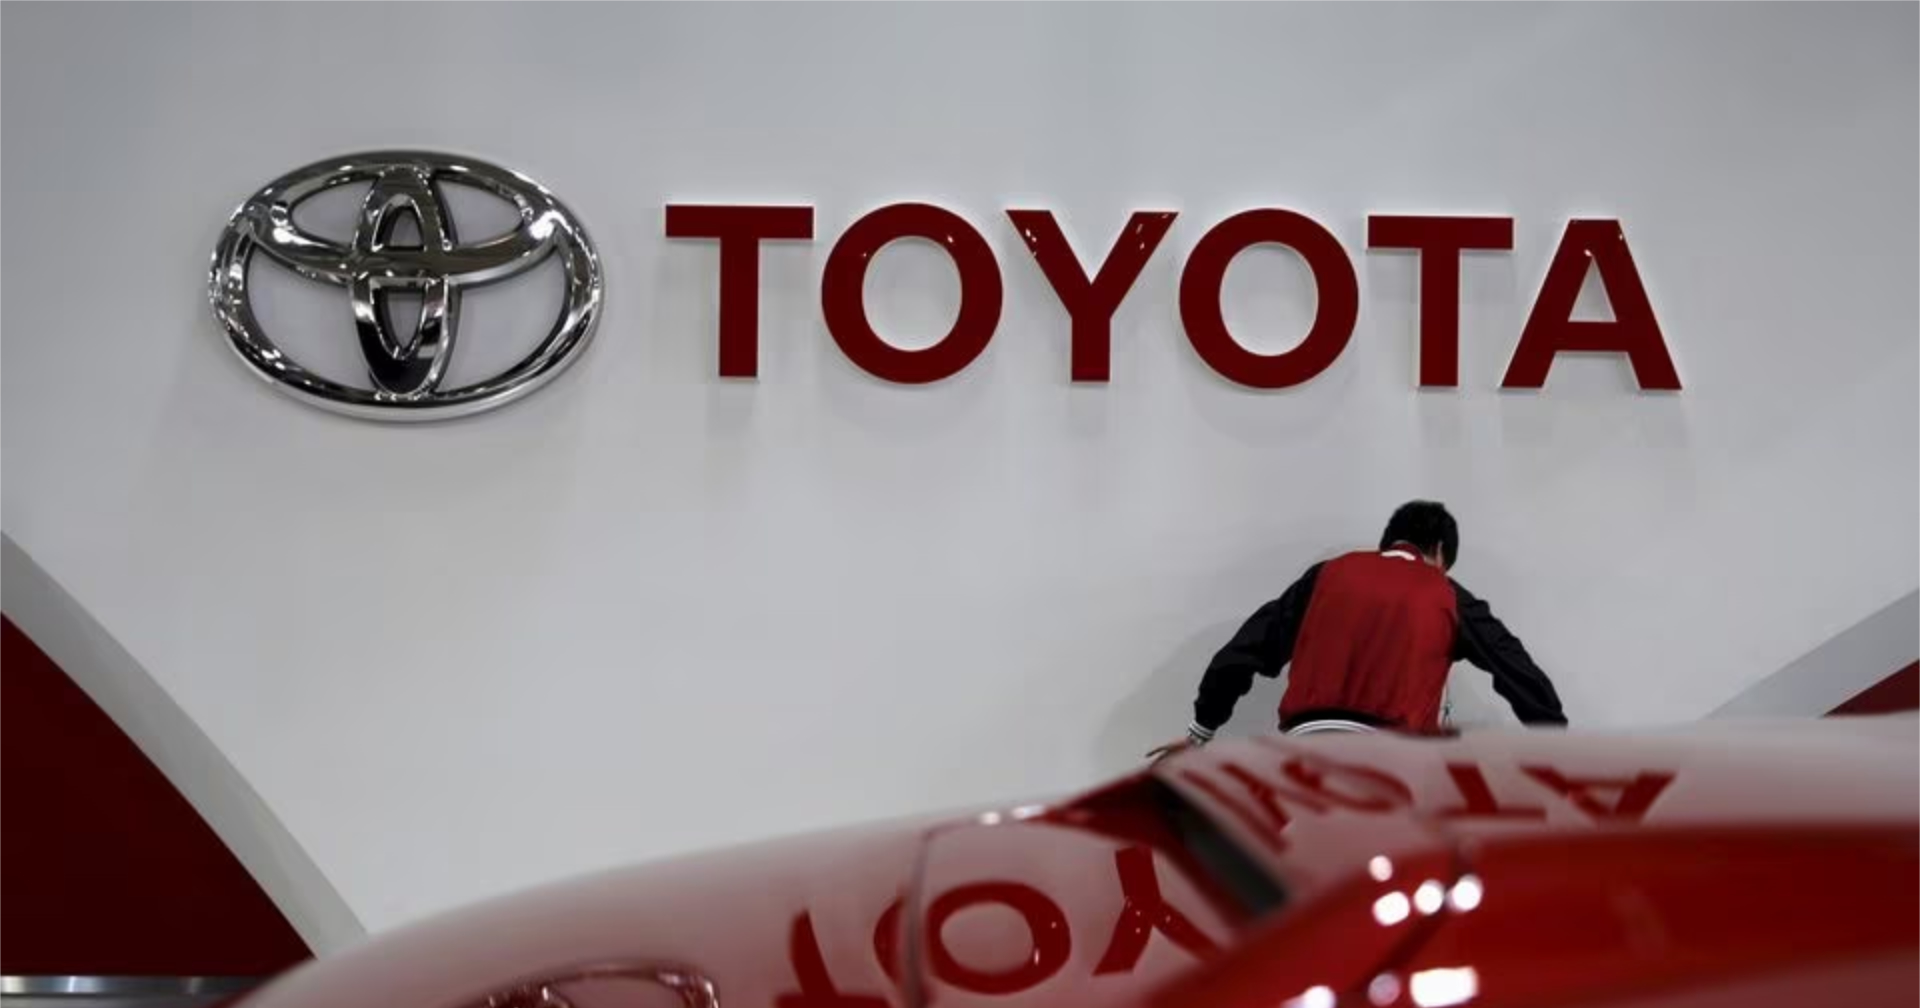 Toyota หยุดการผลิตรถยนต์ที่โรงงานในสาธารณรัฐเช็ก เนื่องจากขาดแคลนชิ้นส่วน